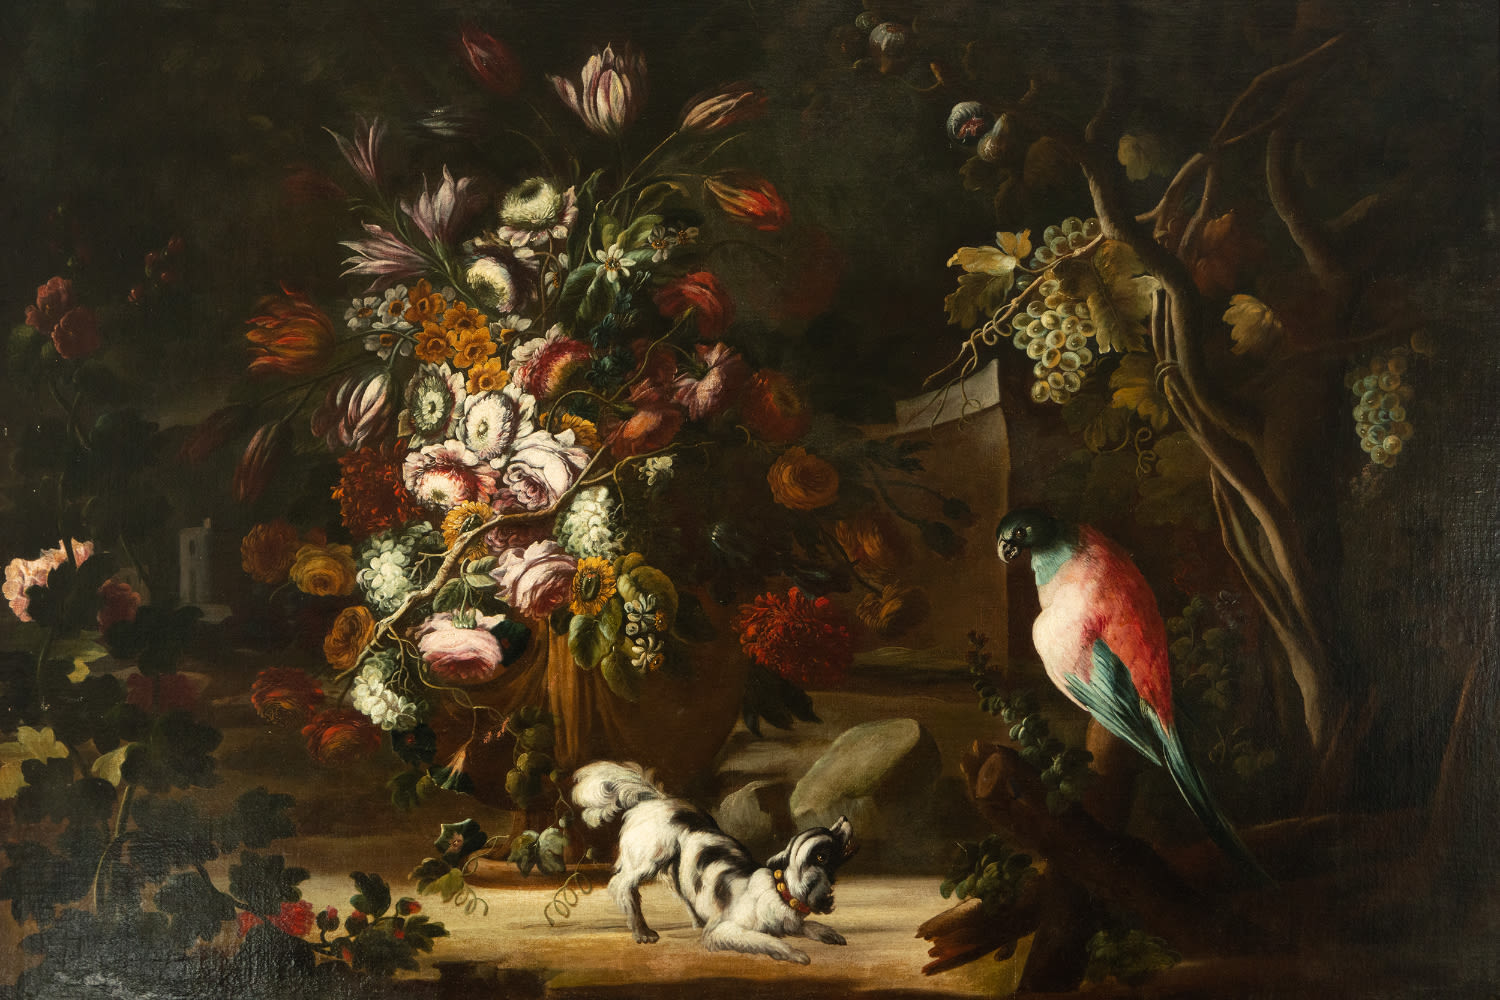 Nicola Casissa, "Still Life with Flowers and Dog", 17th century Italian school - Image 8 of 8